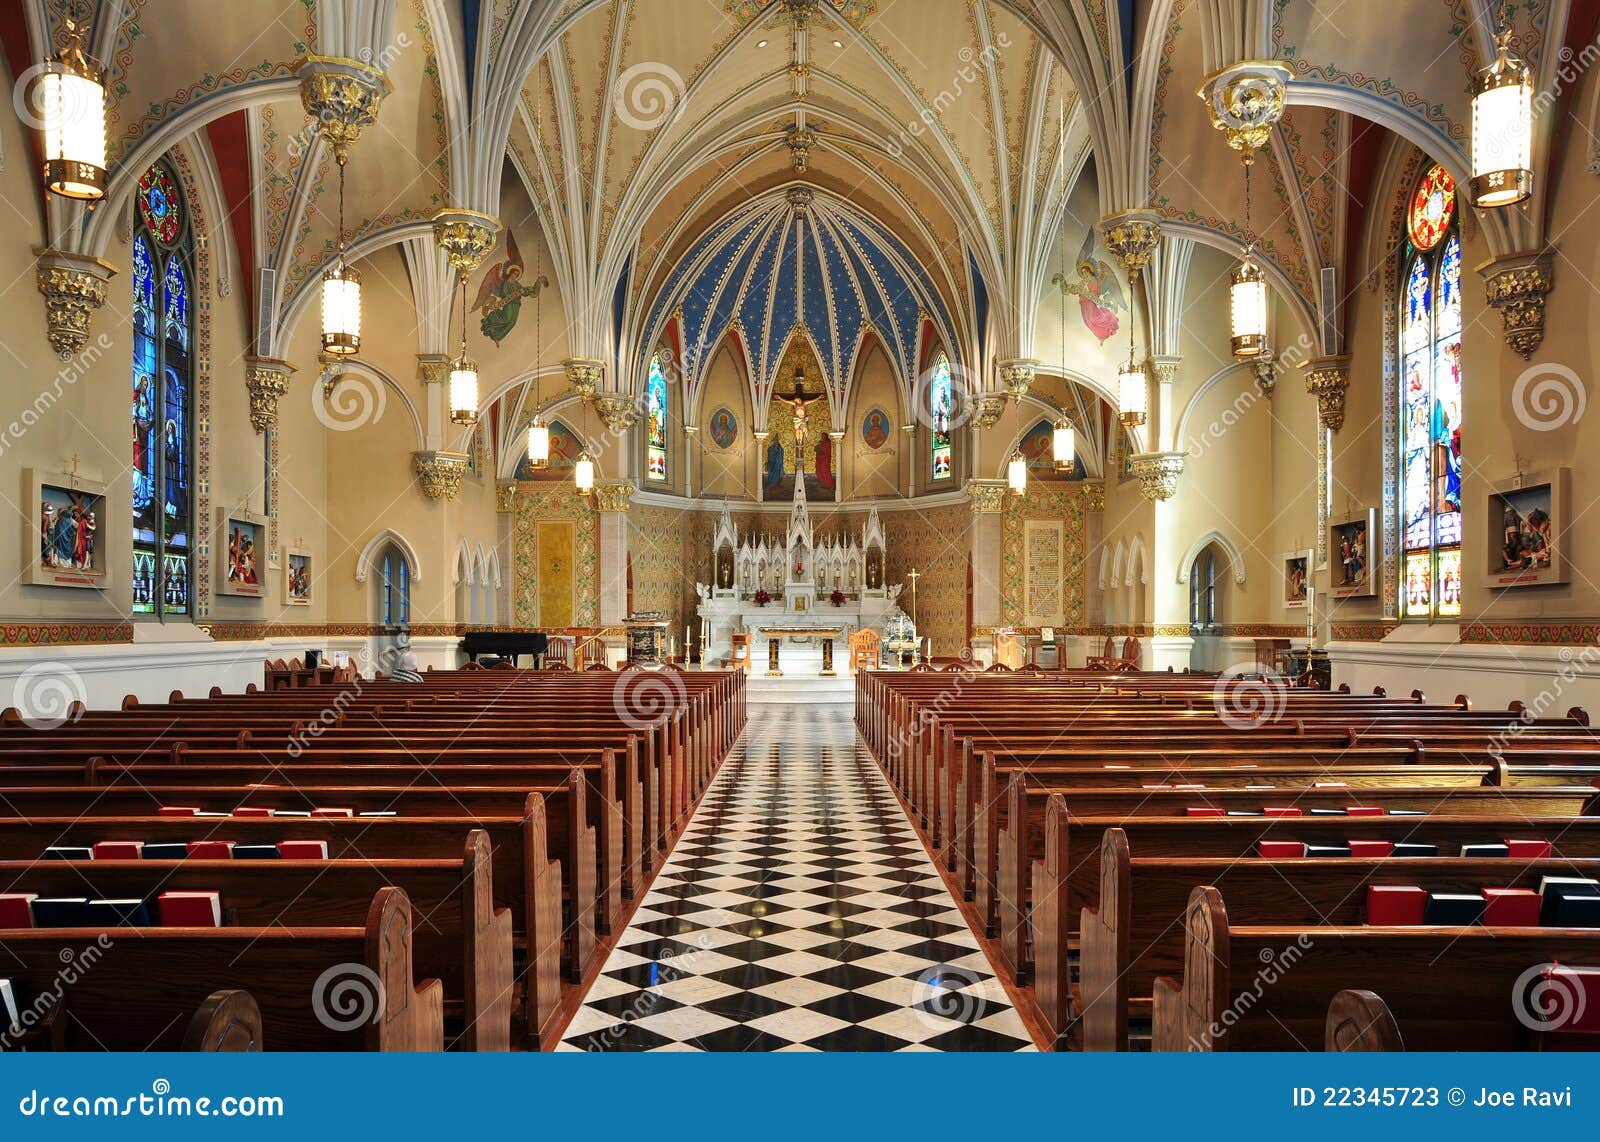 757,374 Catholic Photos - Free & Royalty-Free Stock Photos from Dreamstime